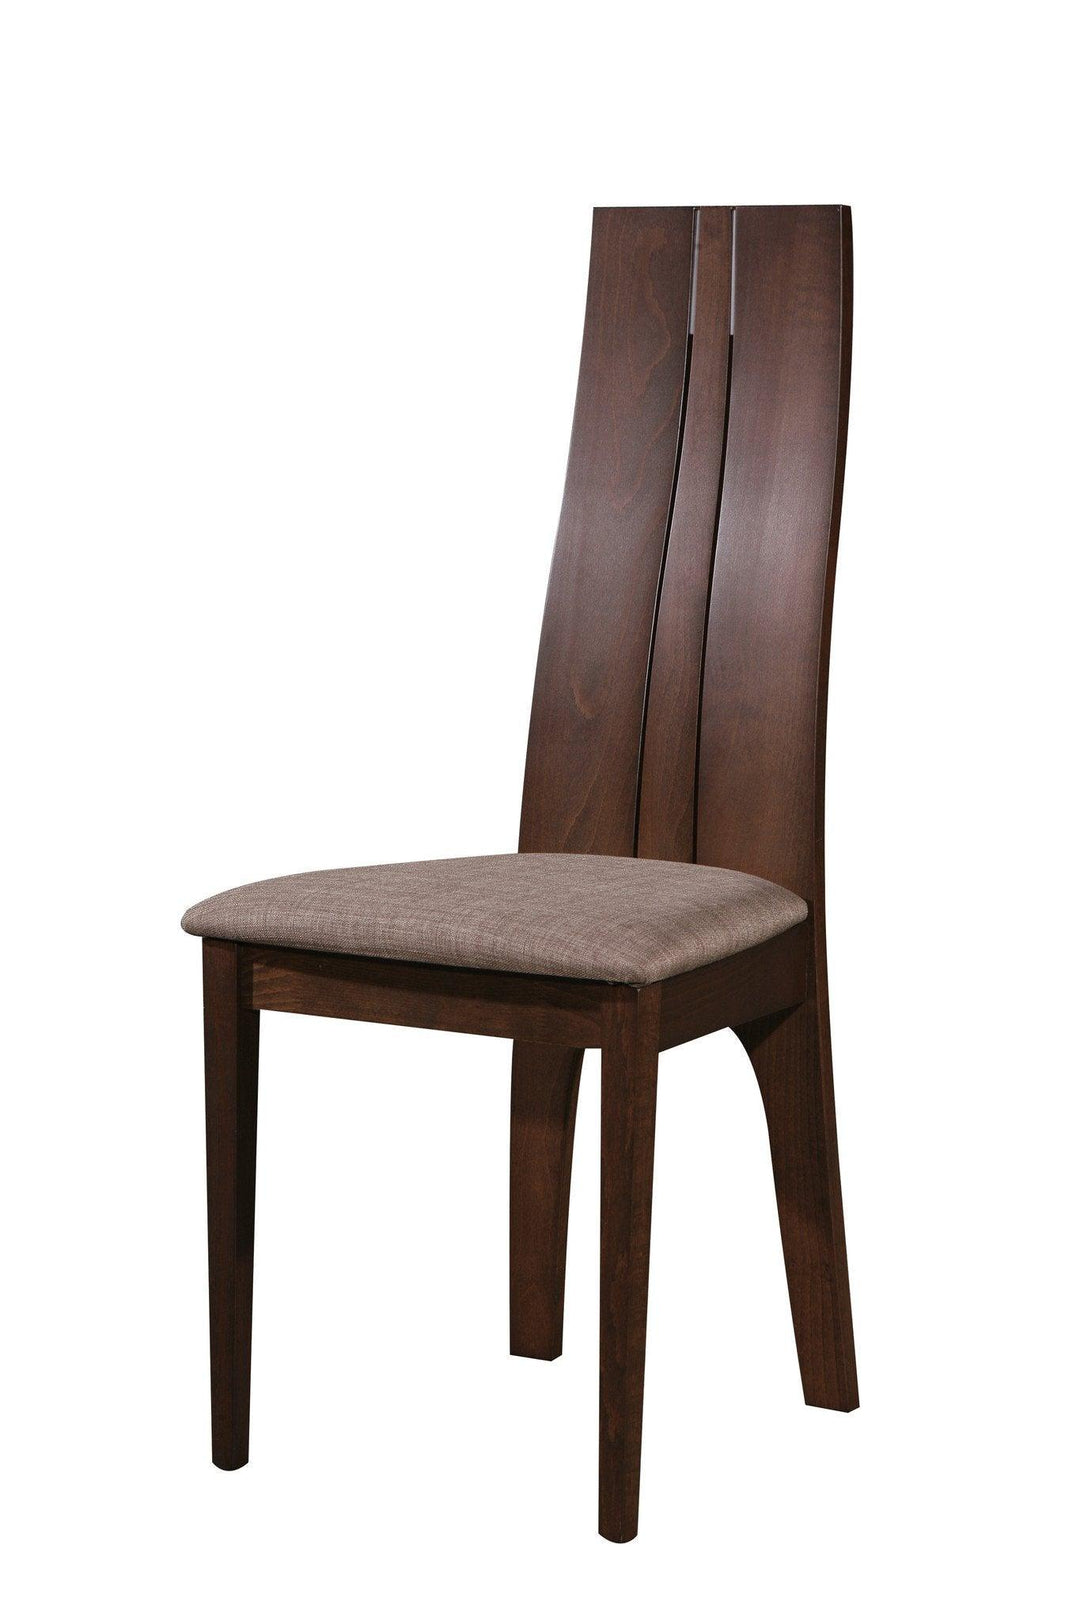 Chairs & Stools - Classic Furniture Dubai UAE